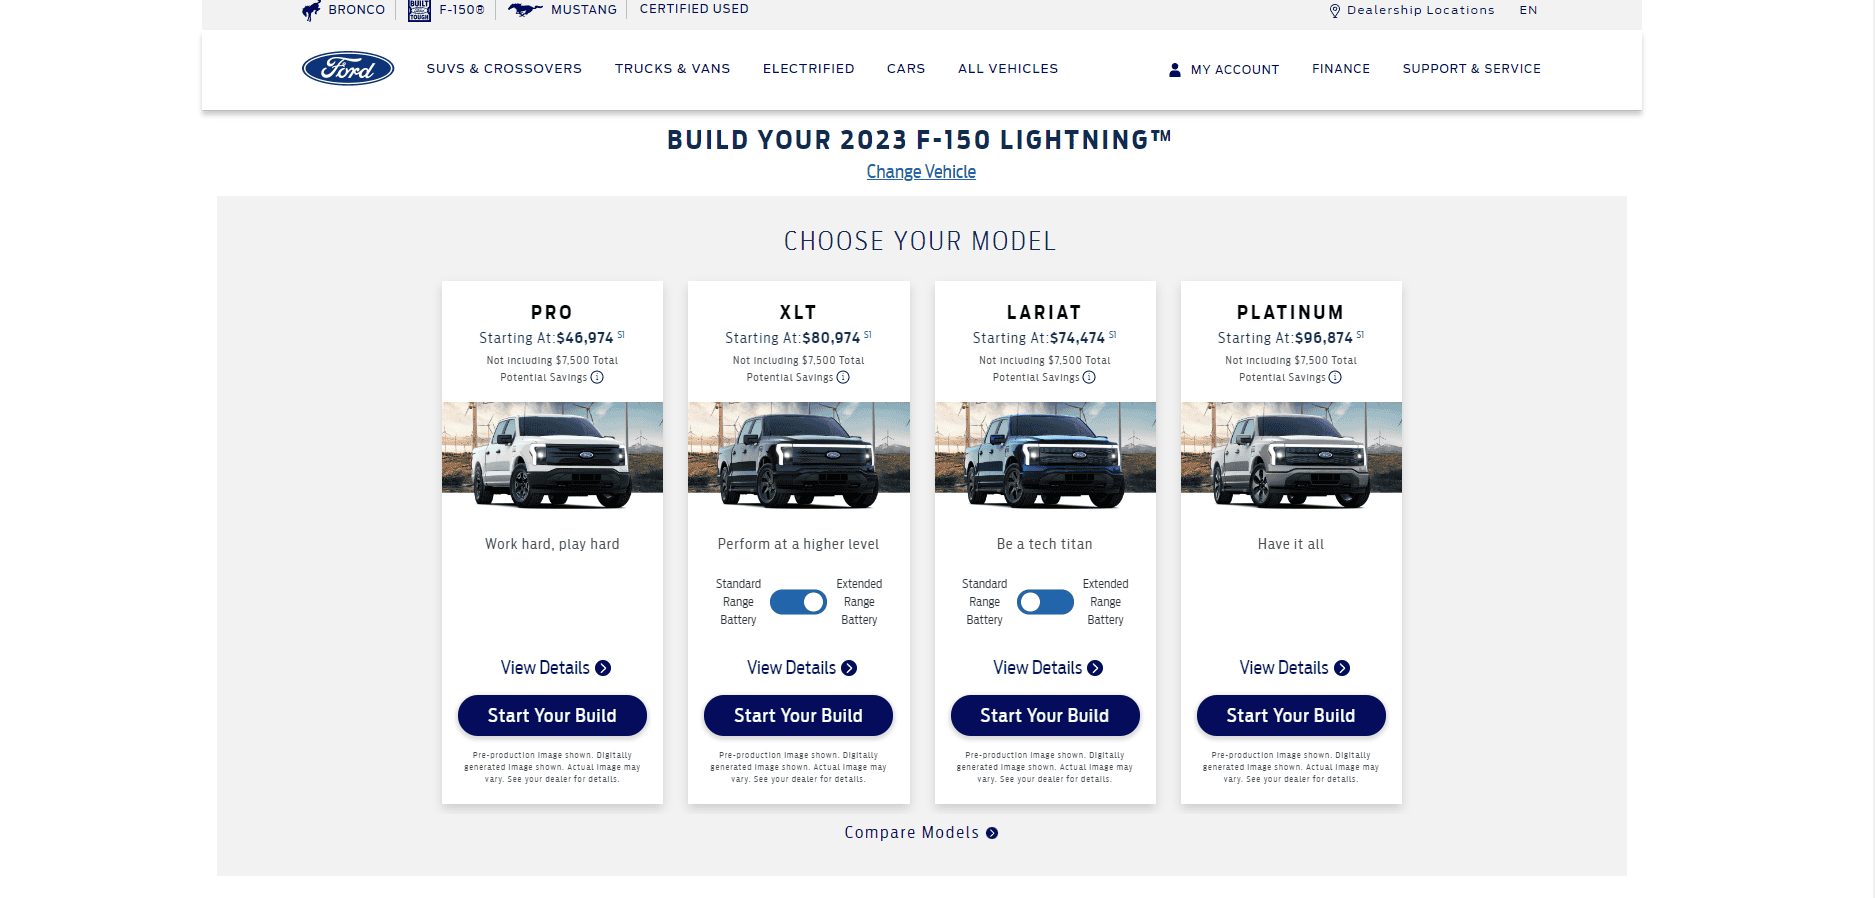 Ford F-150 Lightning 2023 Lightning Order Bank Opens Tomorrow (8/9) Screenshot 2022-08-09 060400